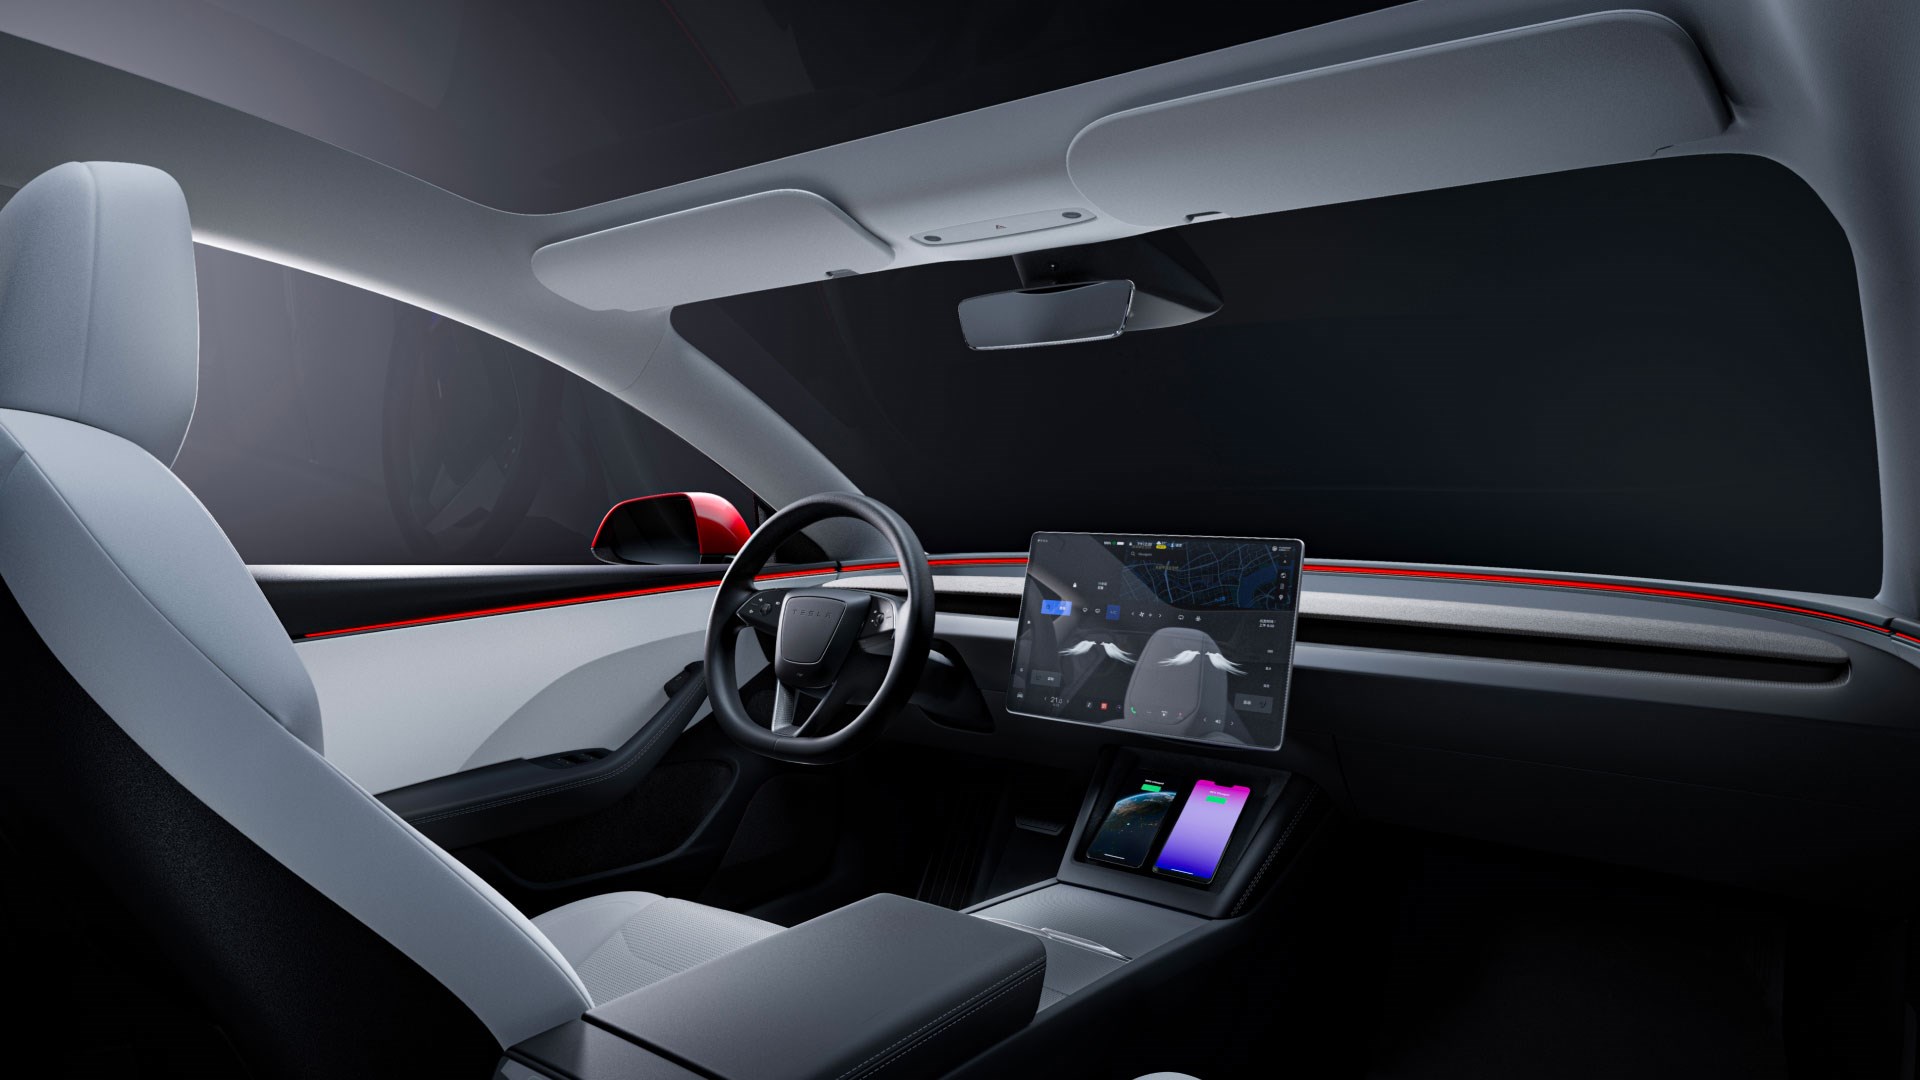 Tesla hits one million European sales ahead of new Model 3 launch